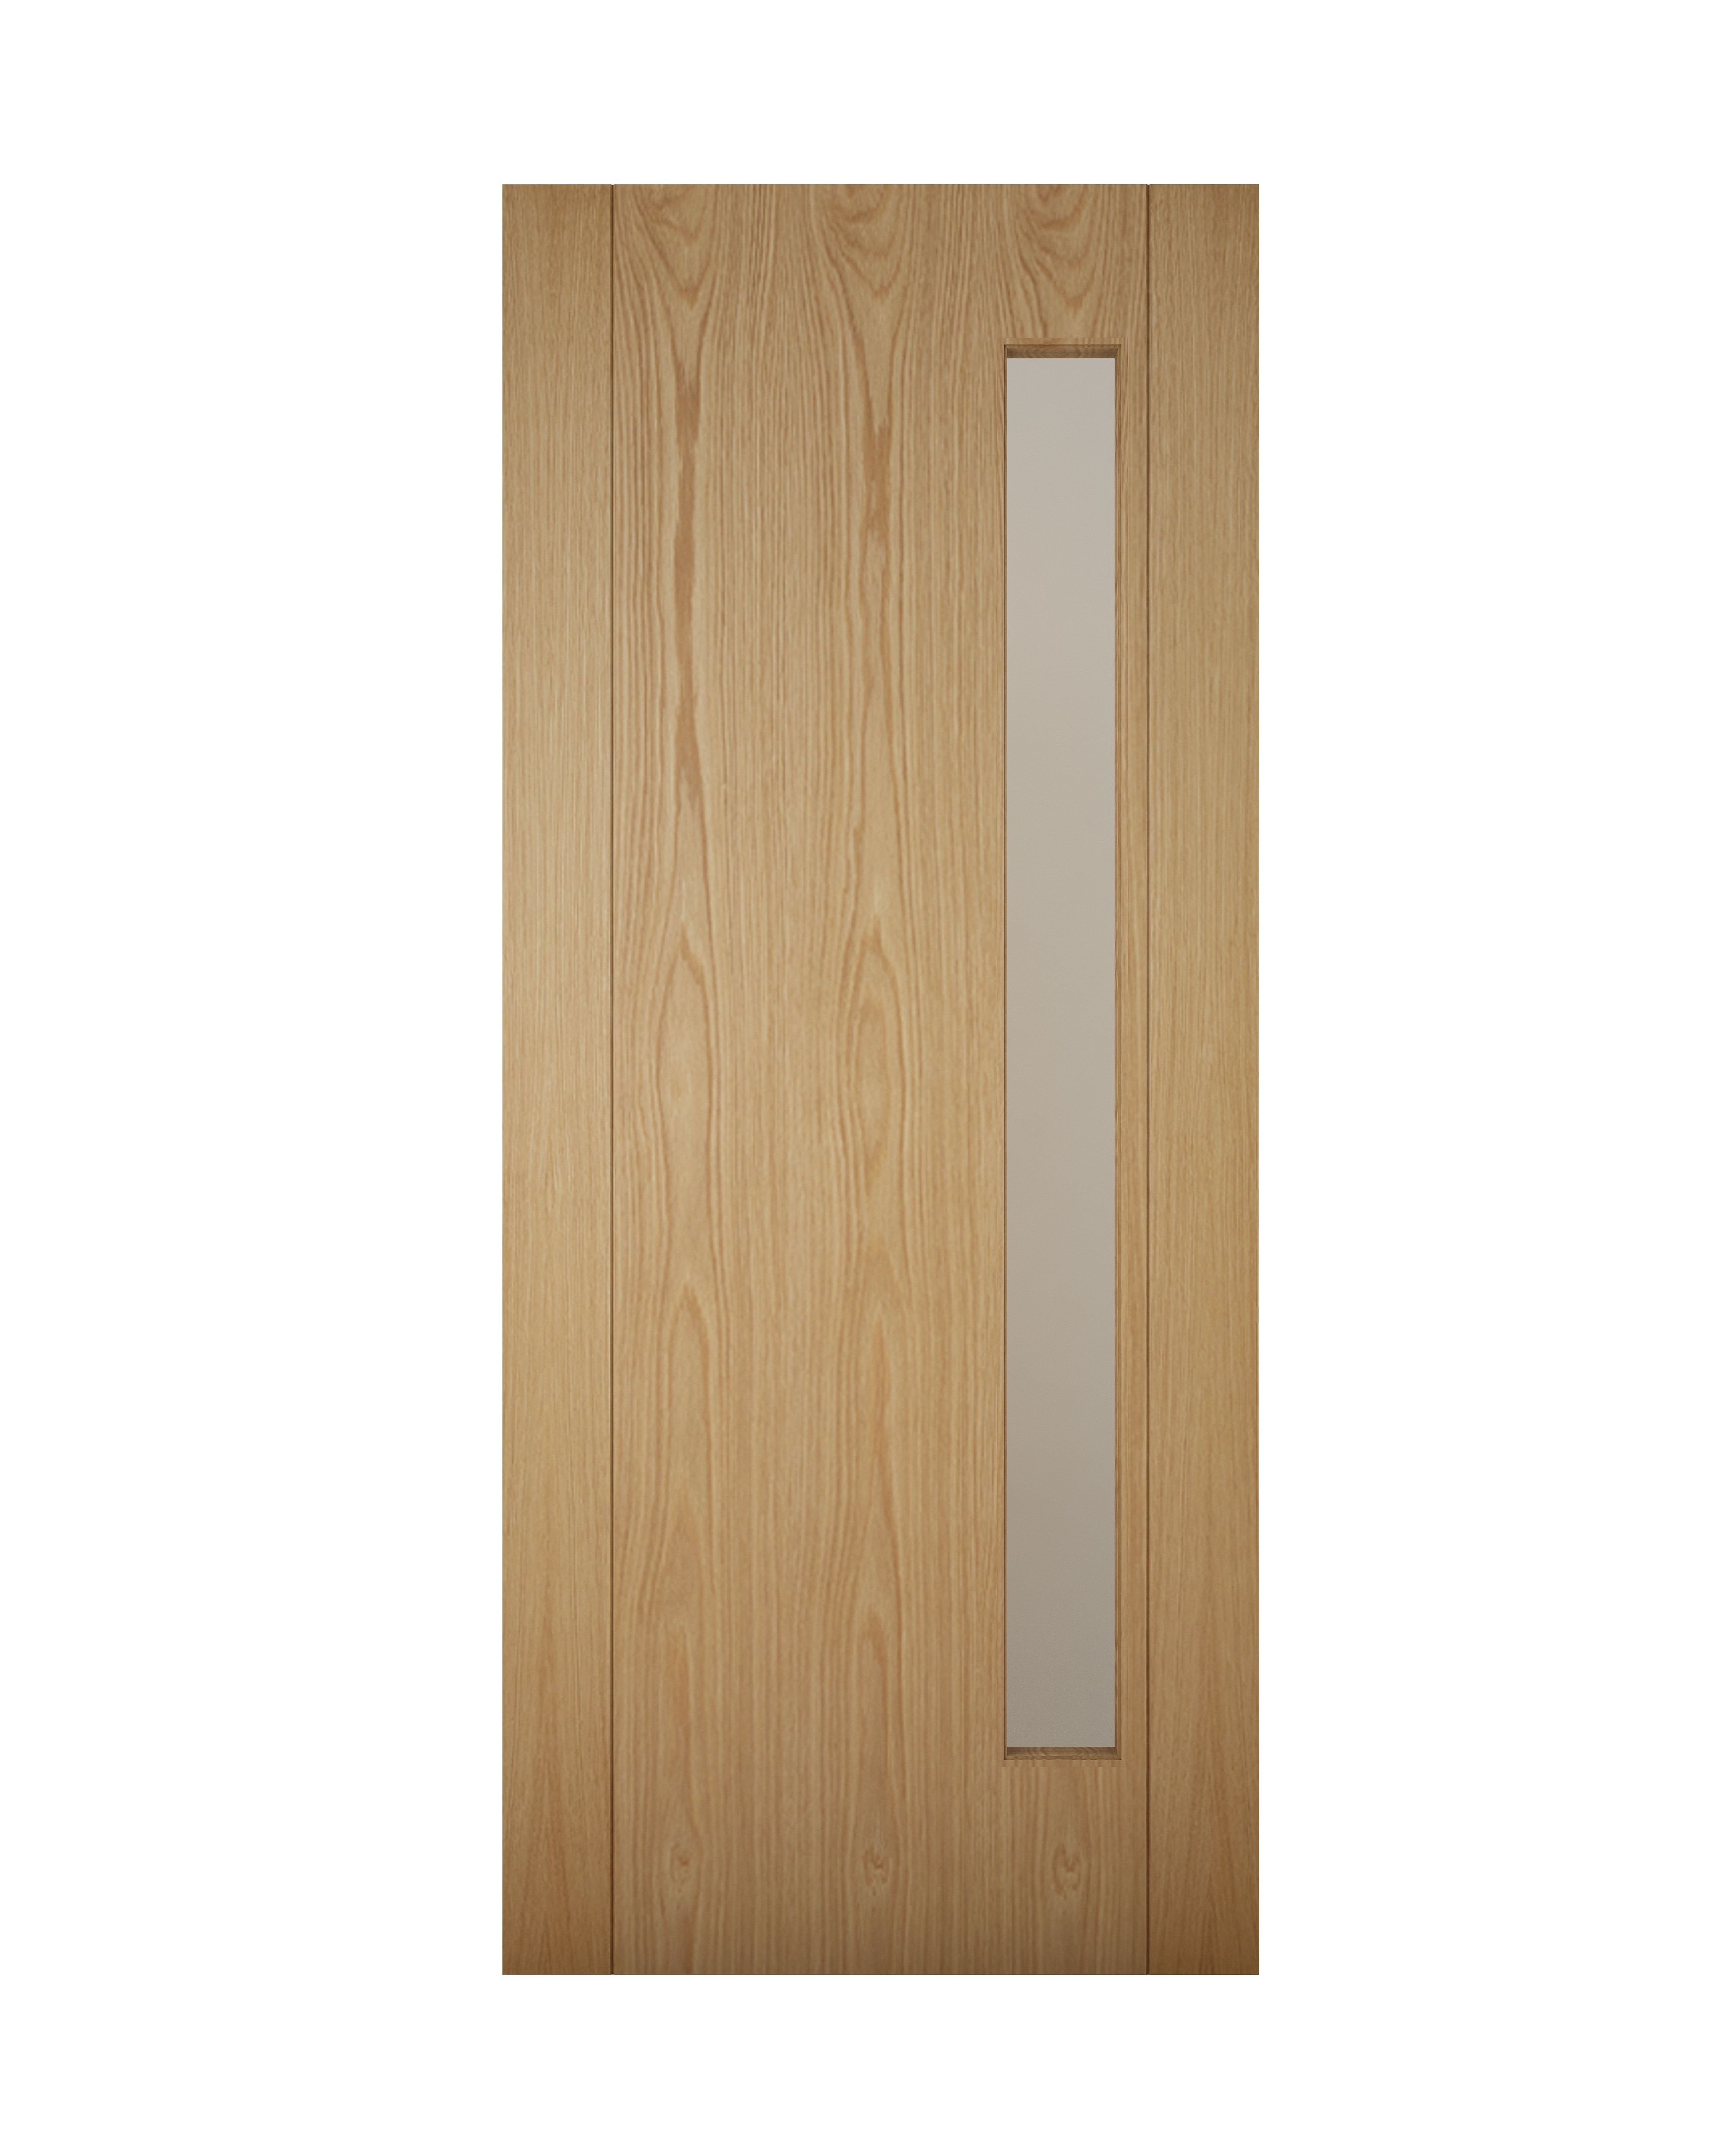 Glazed White oak veneer Left & RHed Front Door set, (H)2125mm (W)907mm